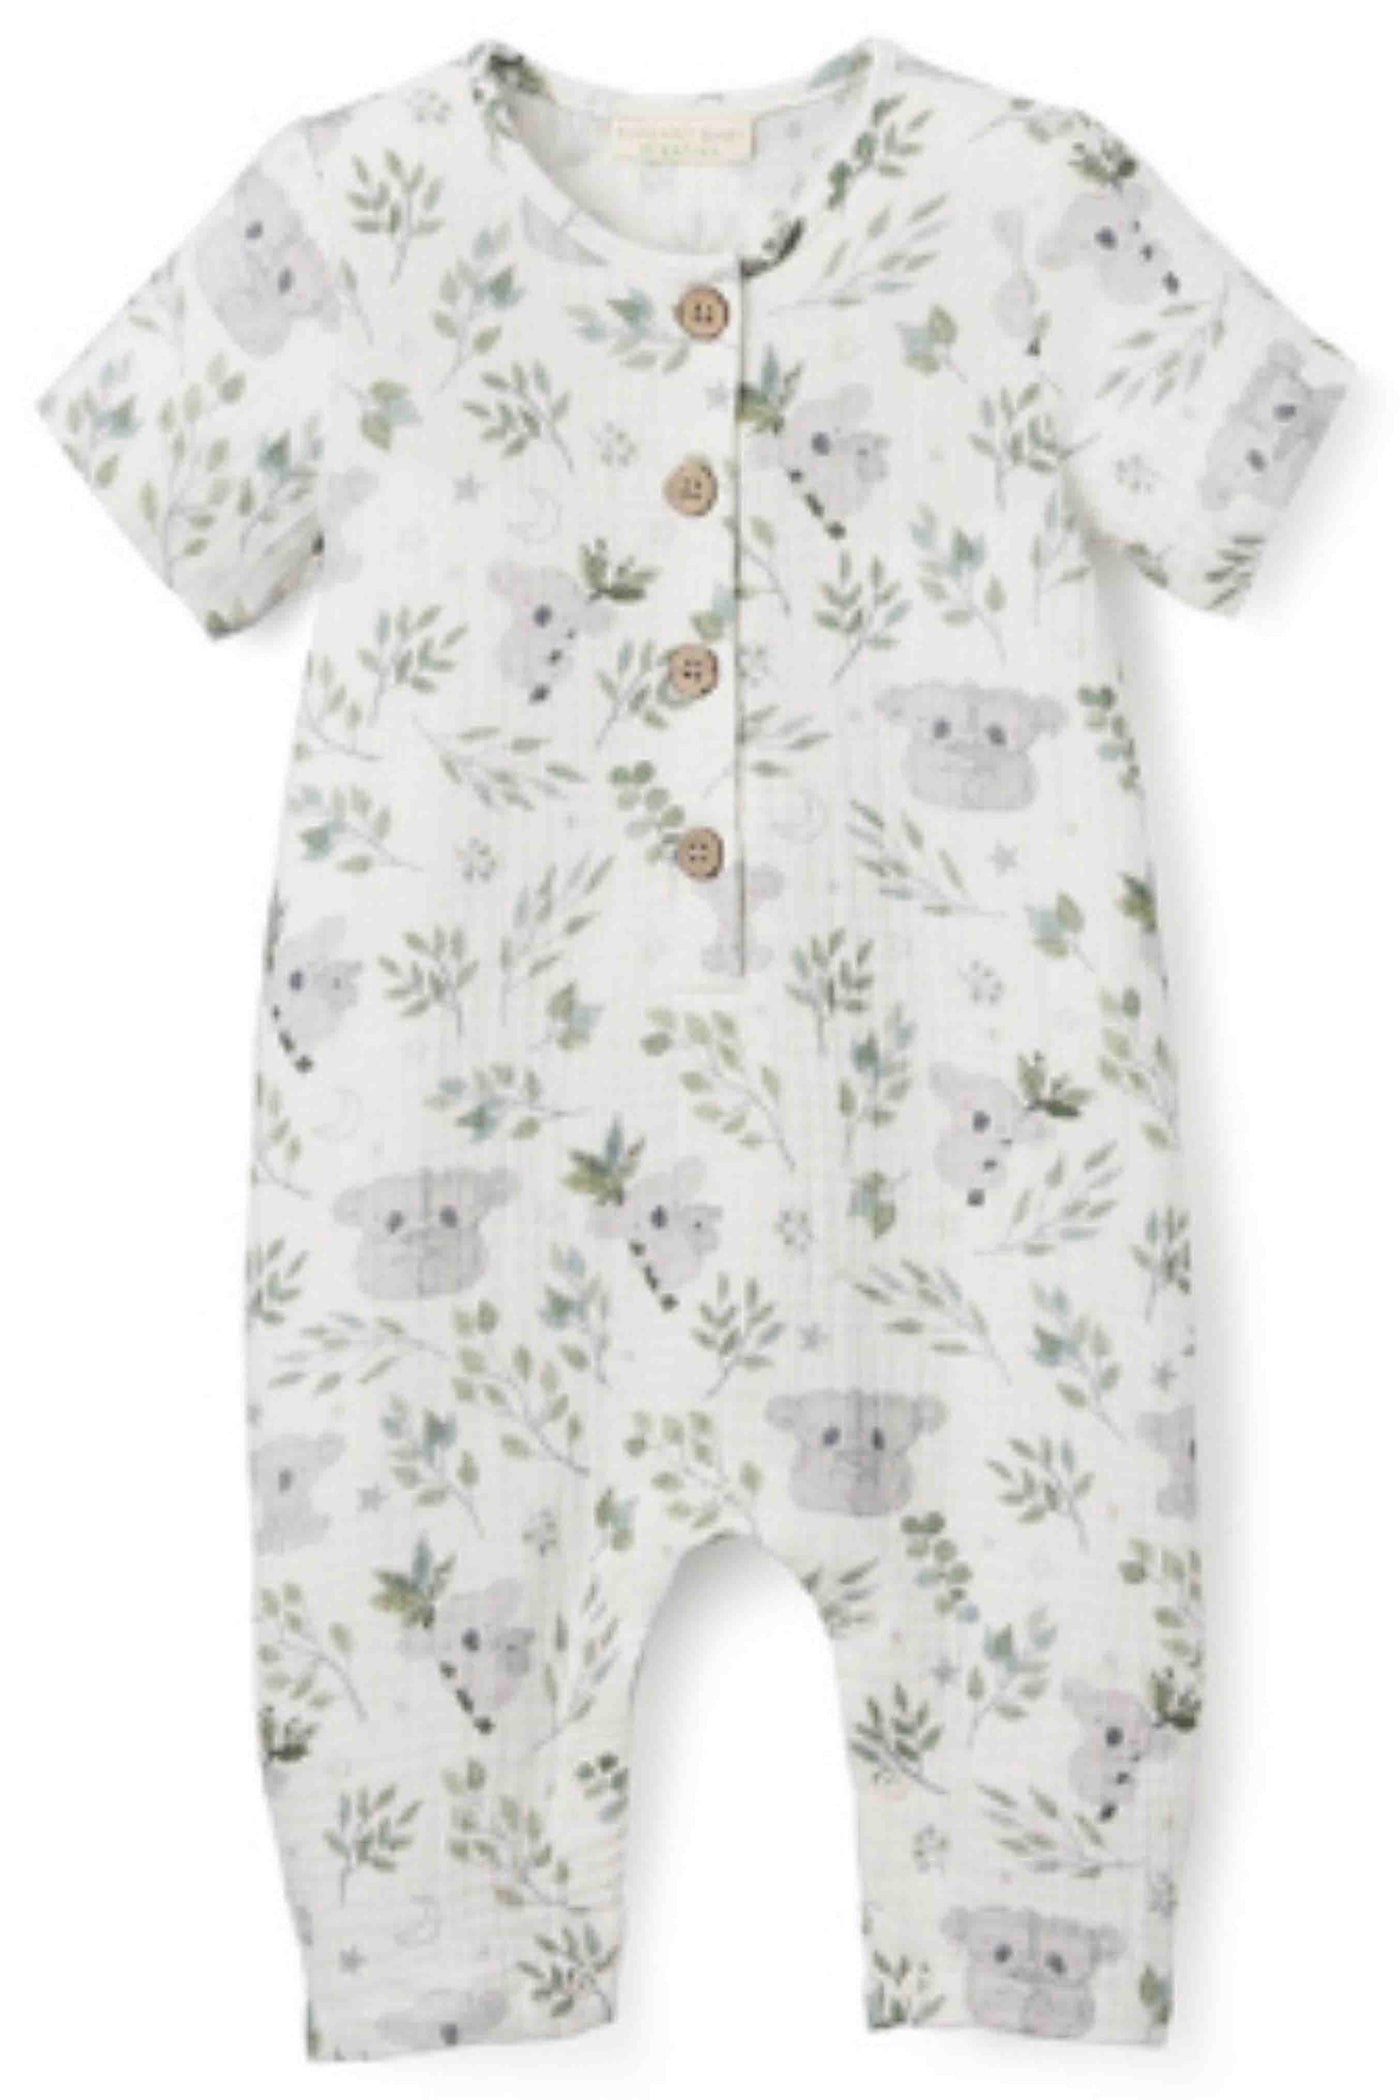 Koala Print Short Sleeve Jumpsuit by Elegant Baby 